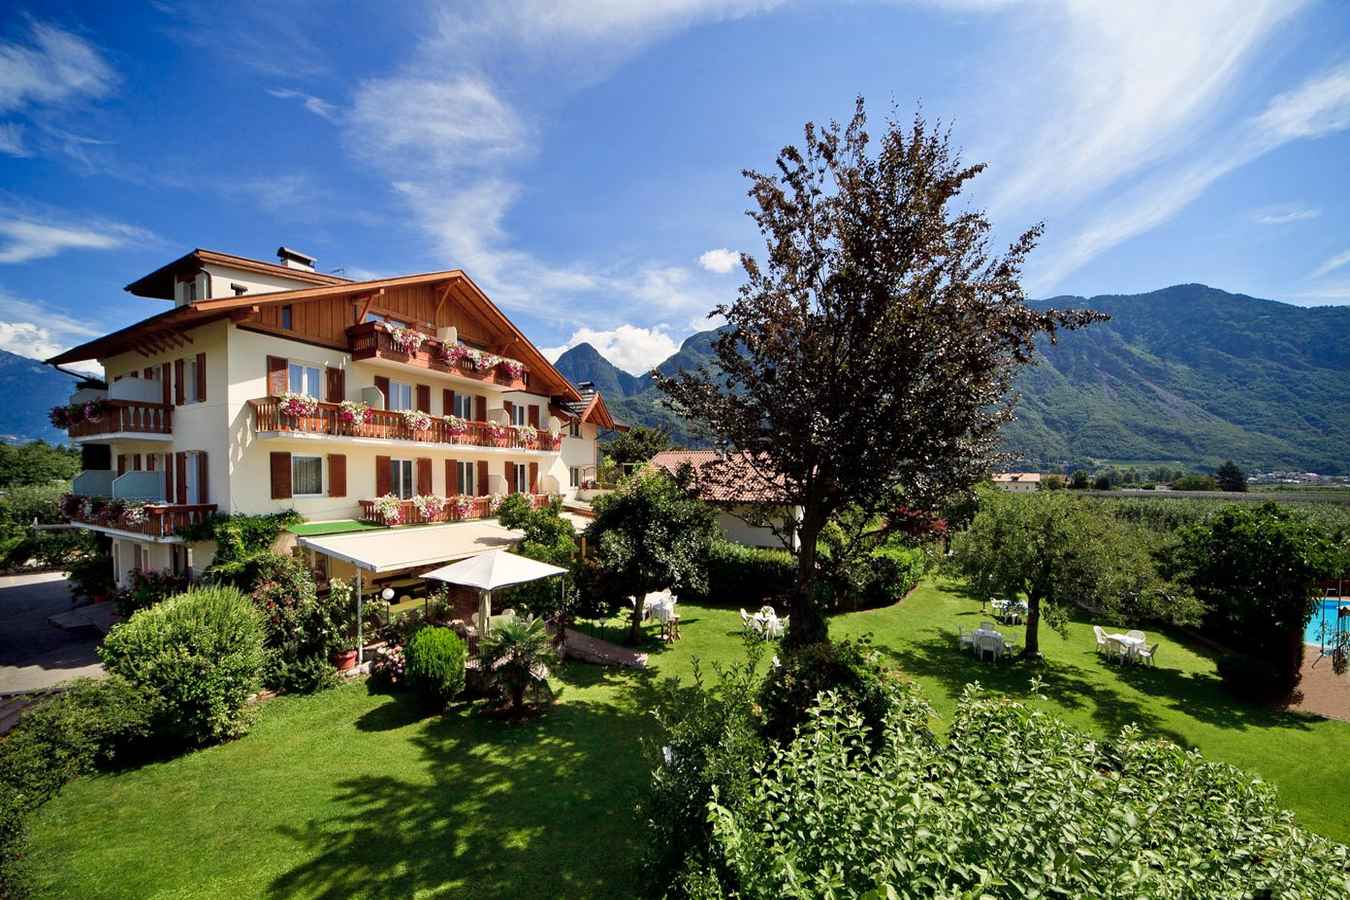 Hotel Pfeiss Meran, South Tyrol - Italy